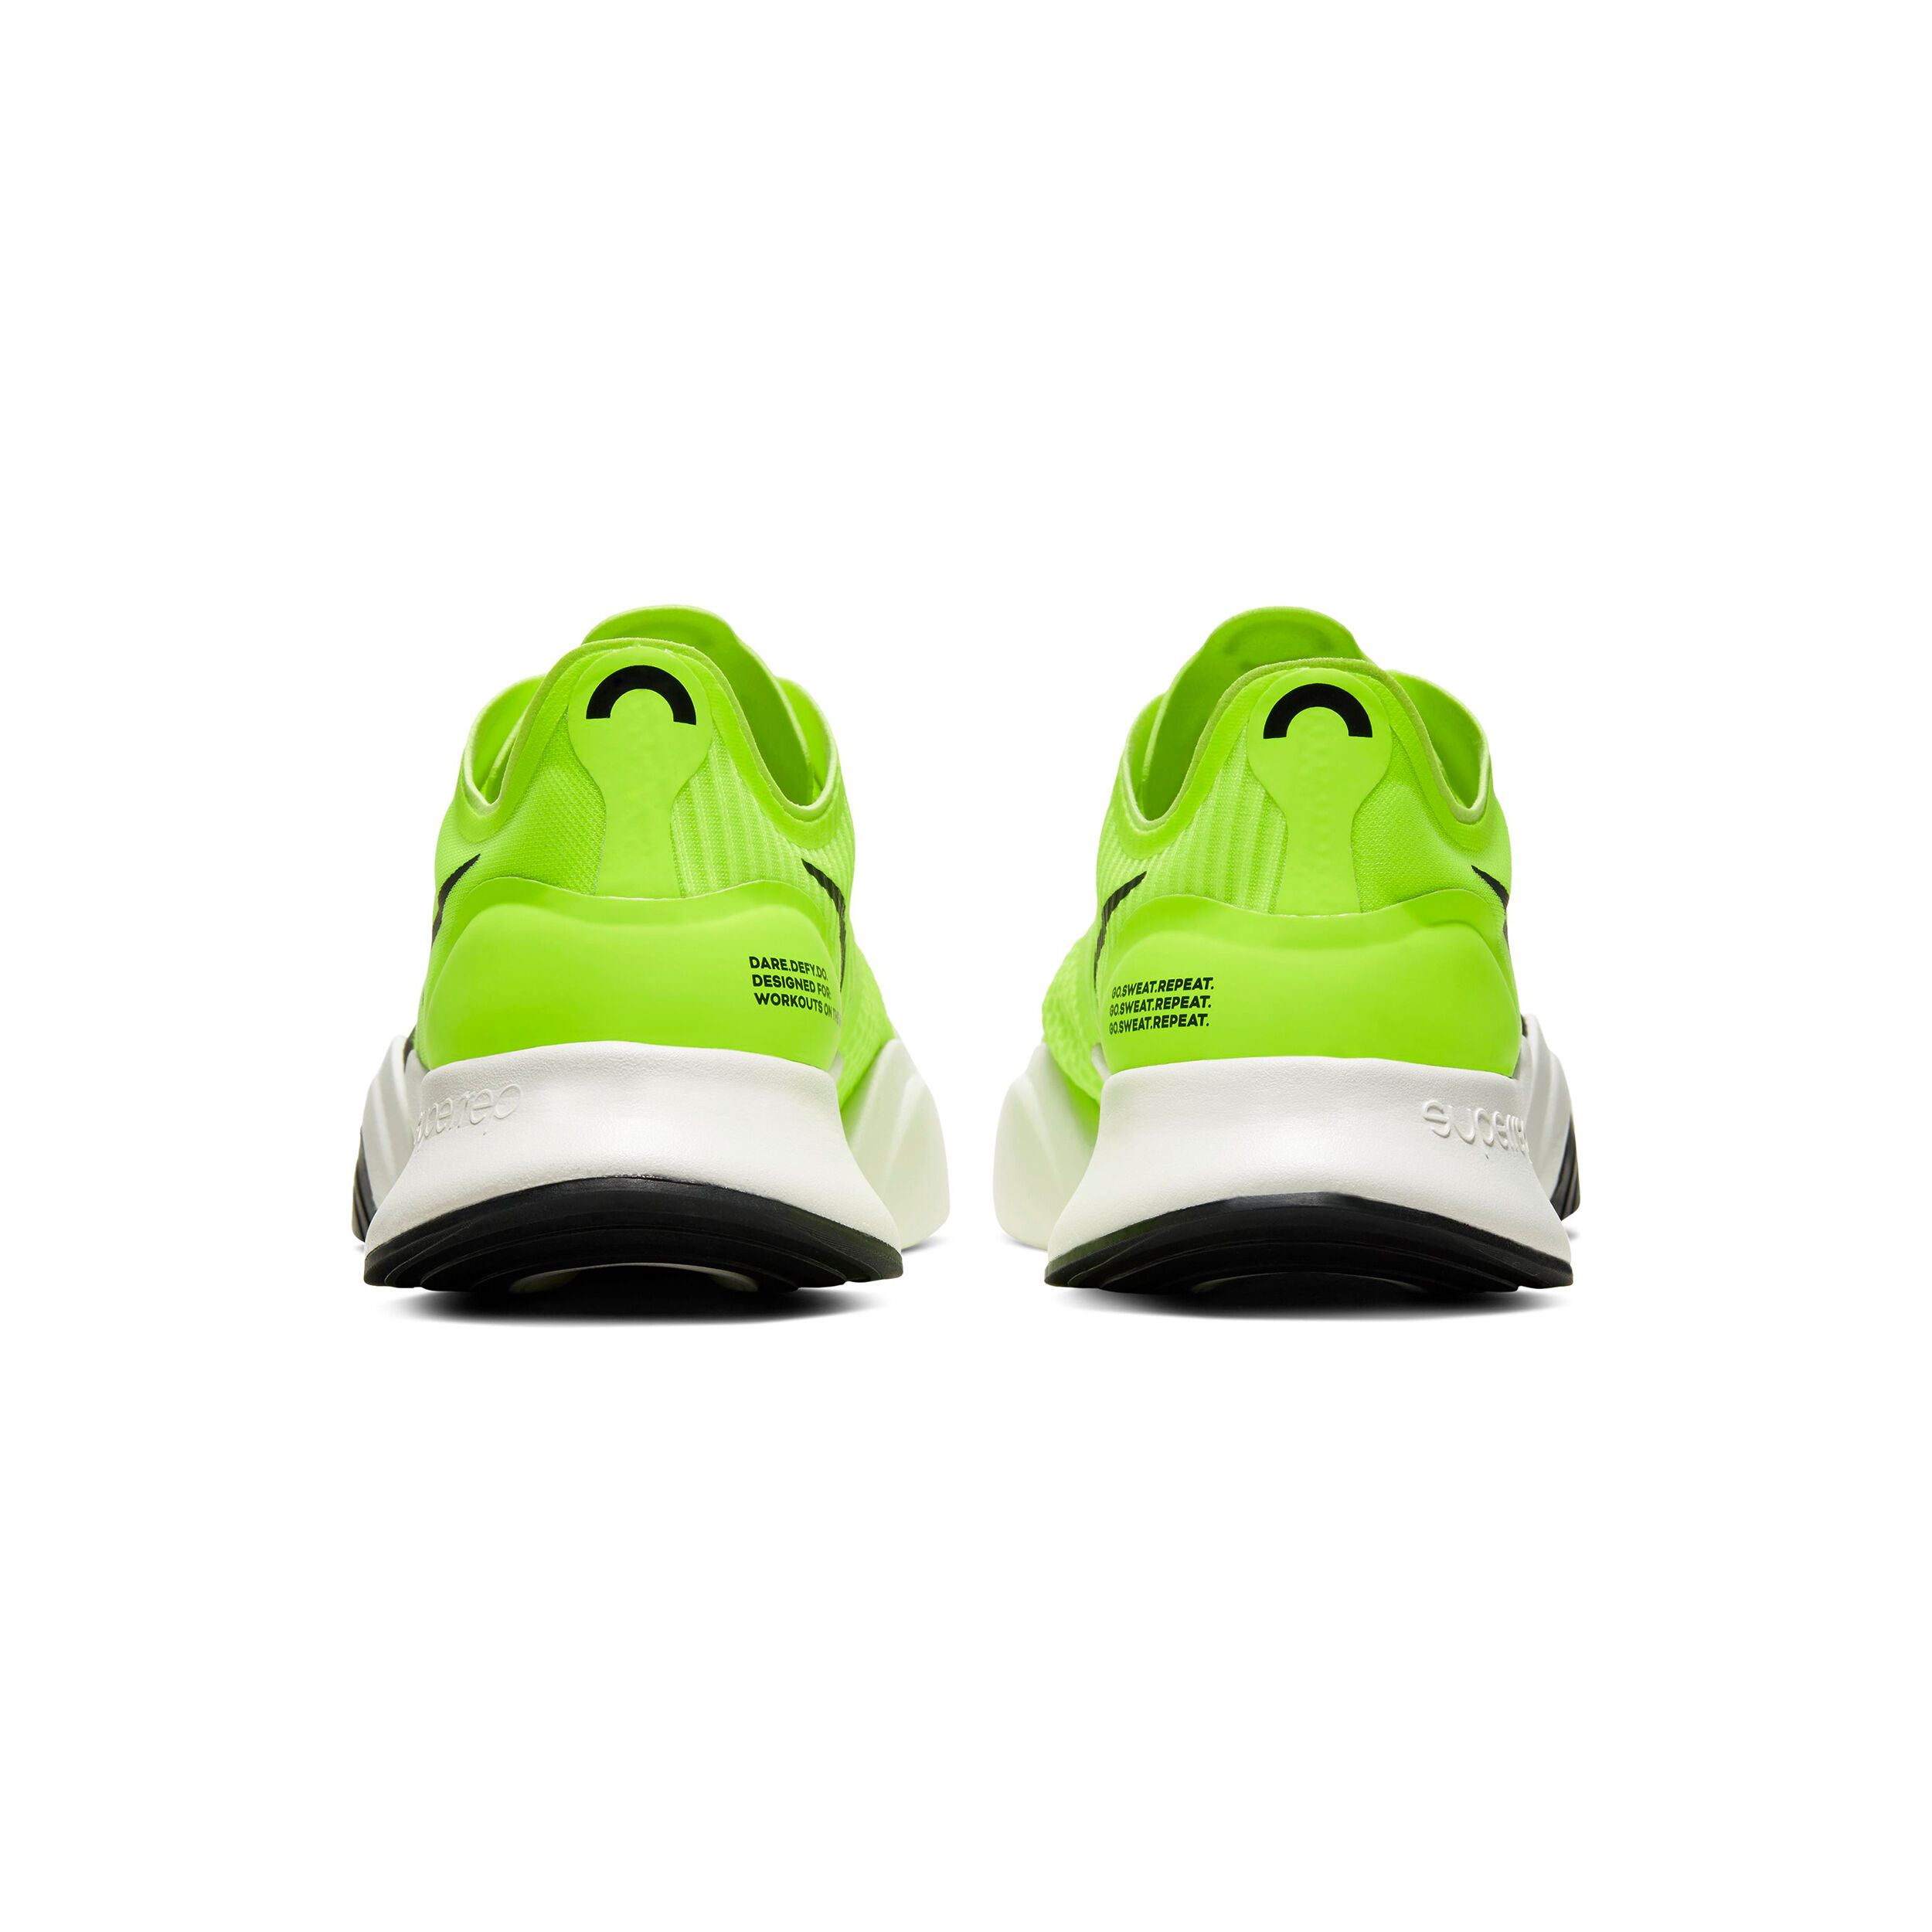 neon green nike shoes mens